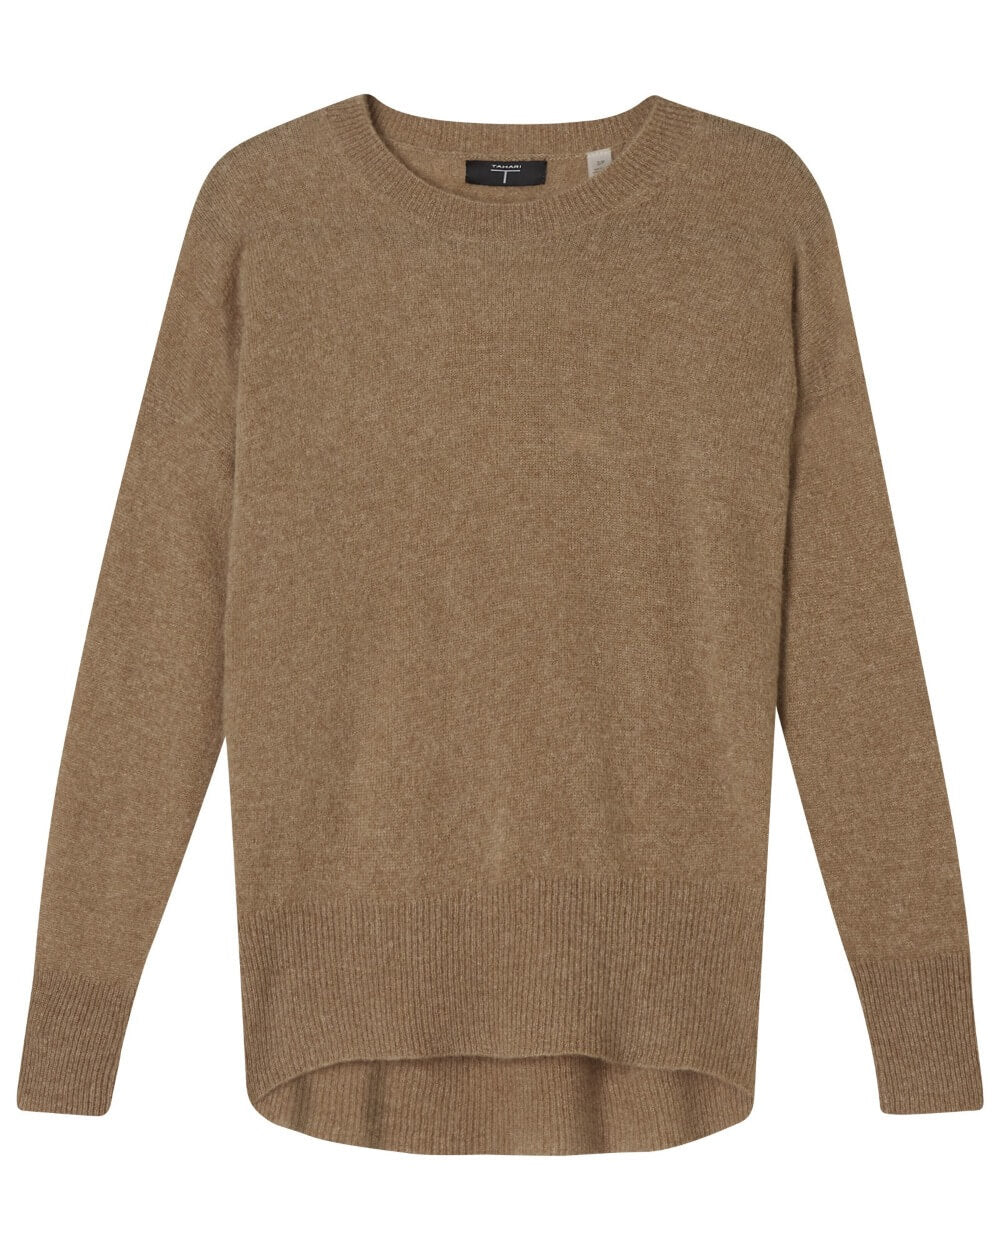 Classic Cashmere Crewneck Sweater | T Tahari | JANE + MERCER